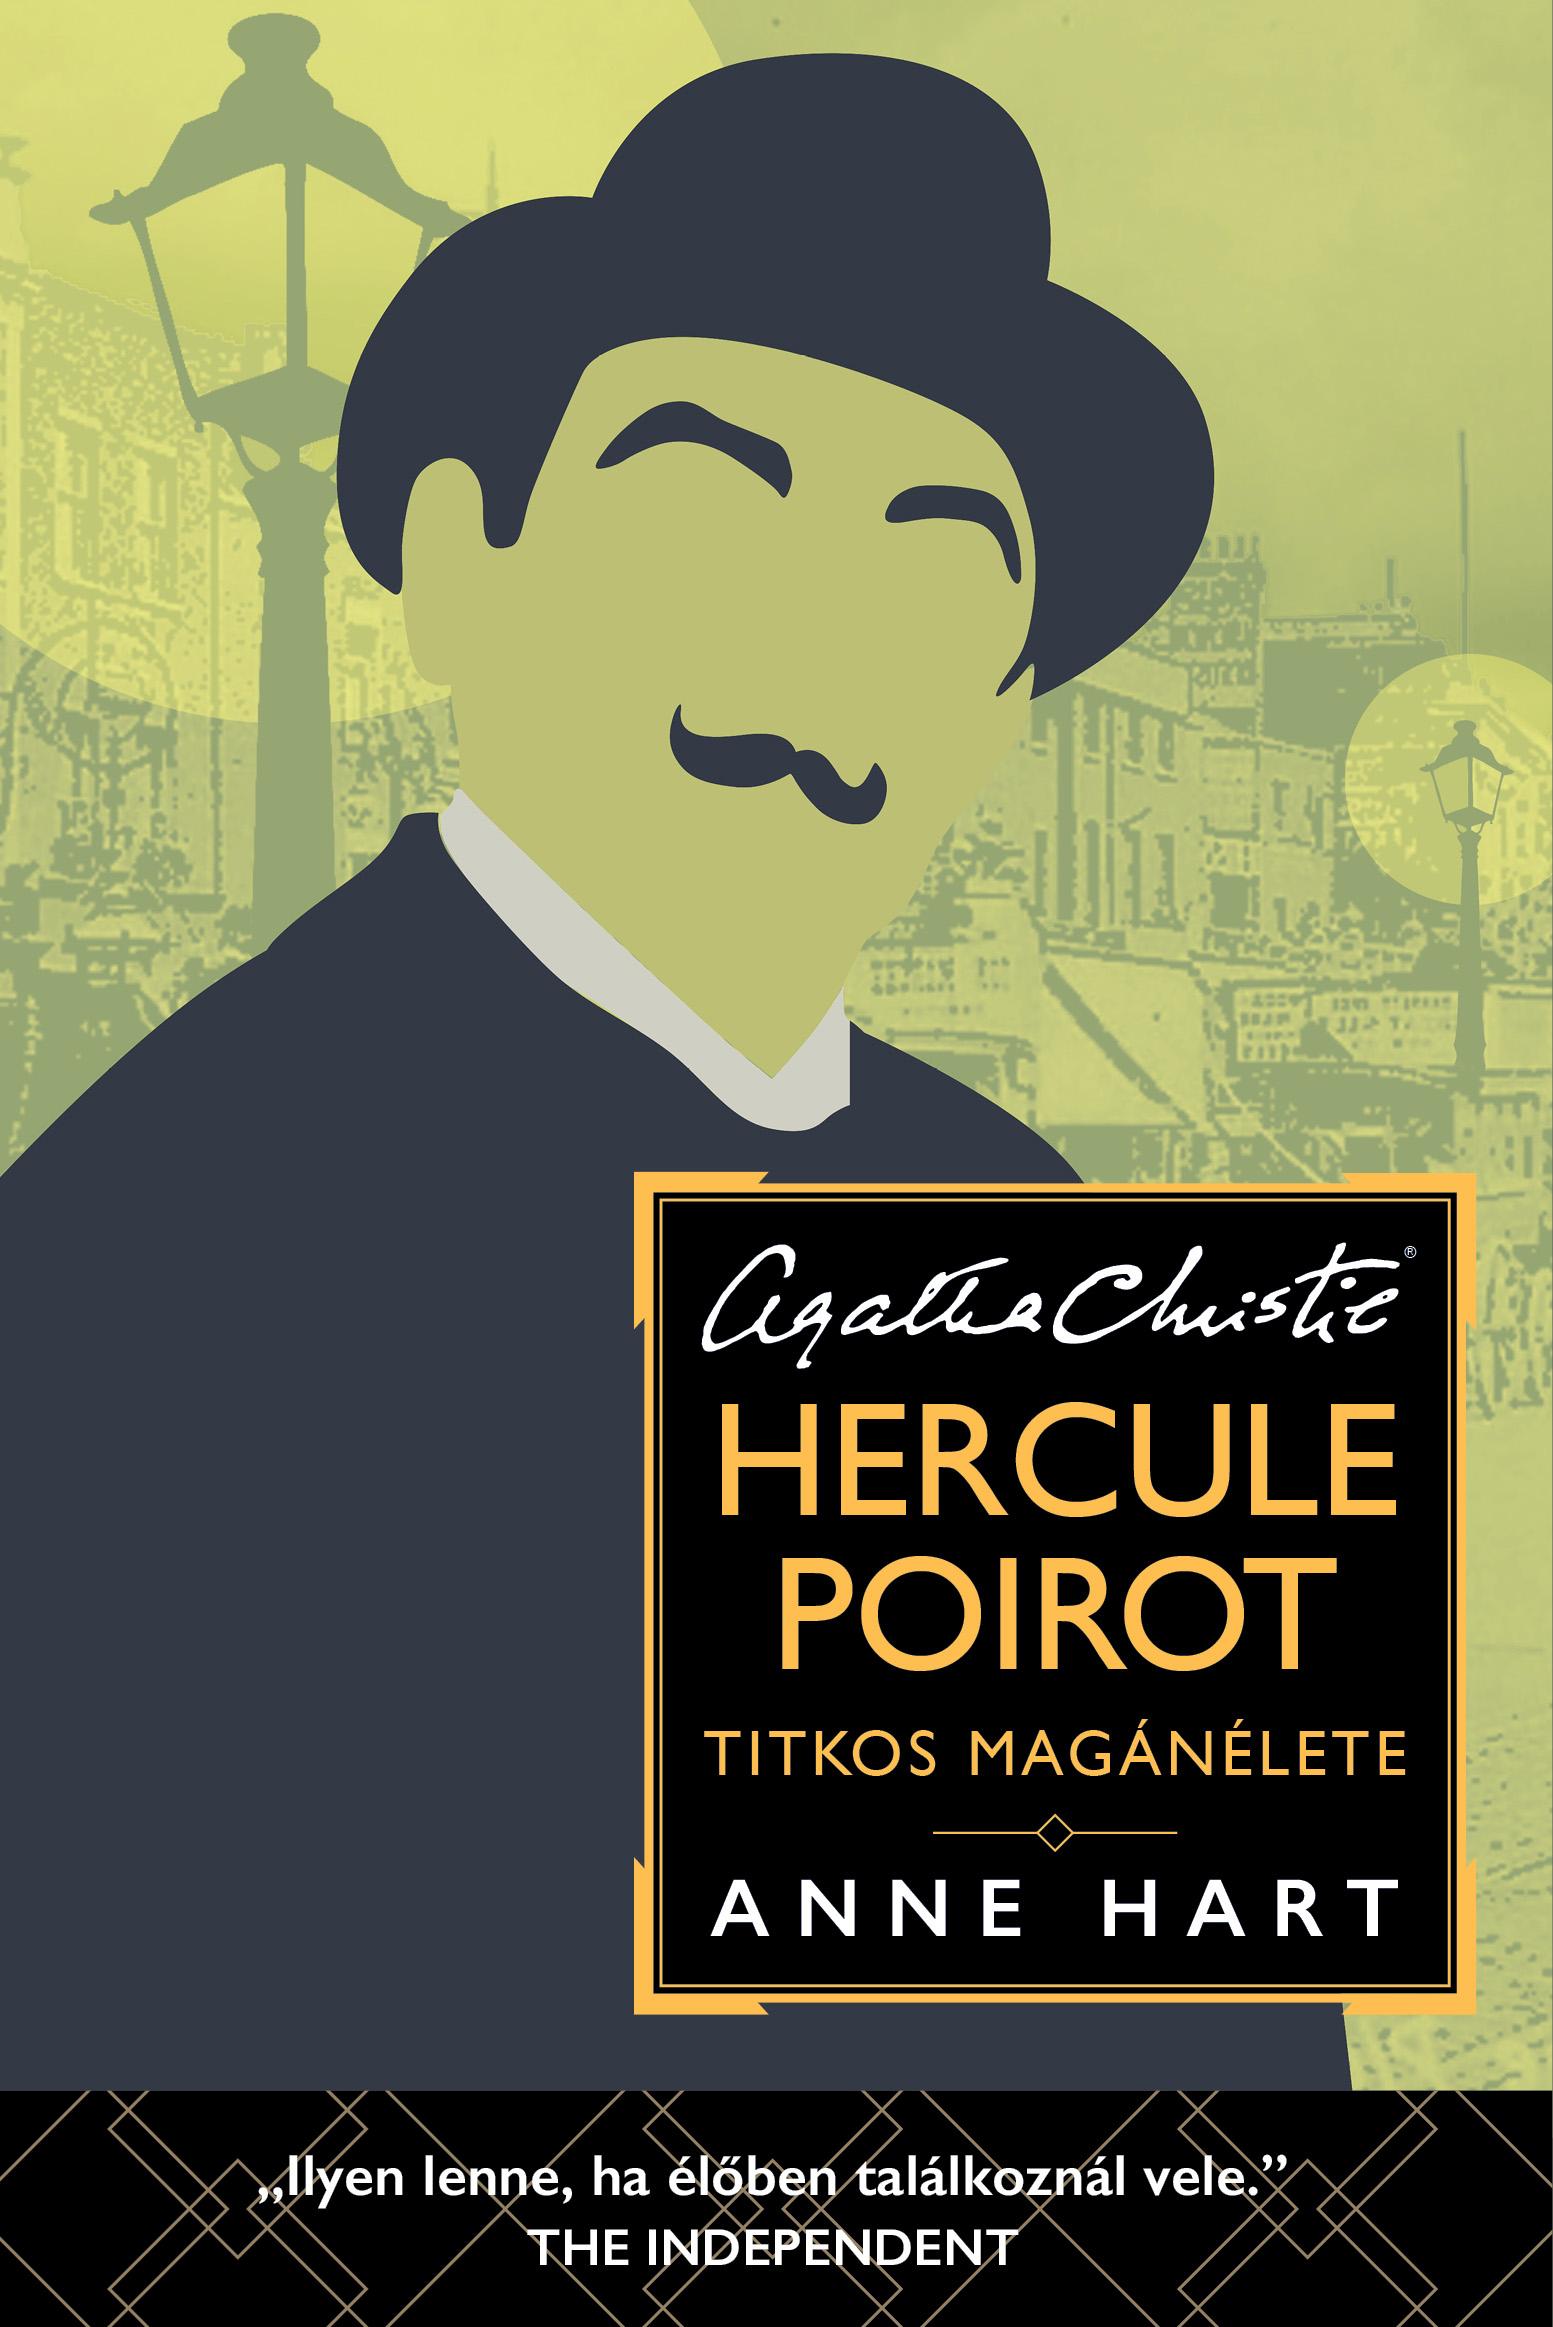 Anne Hart - Hercule Poirot titkos magánélete  - Agatha Christie rajongóinak